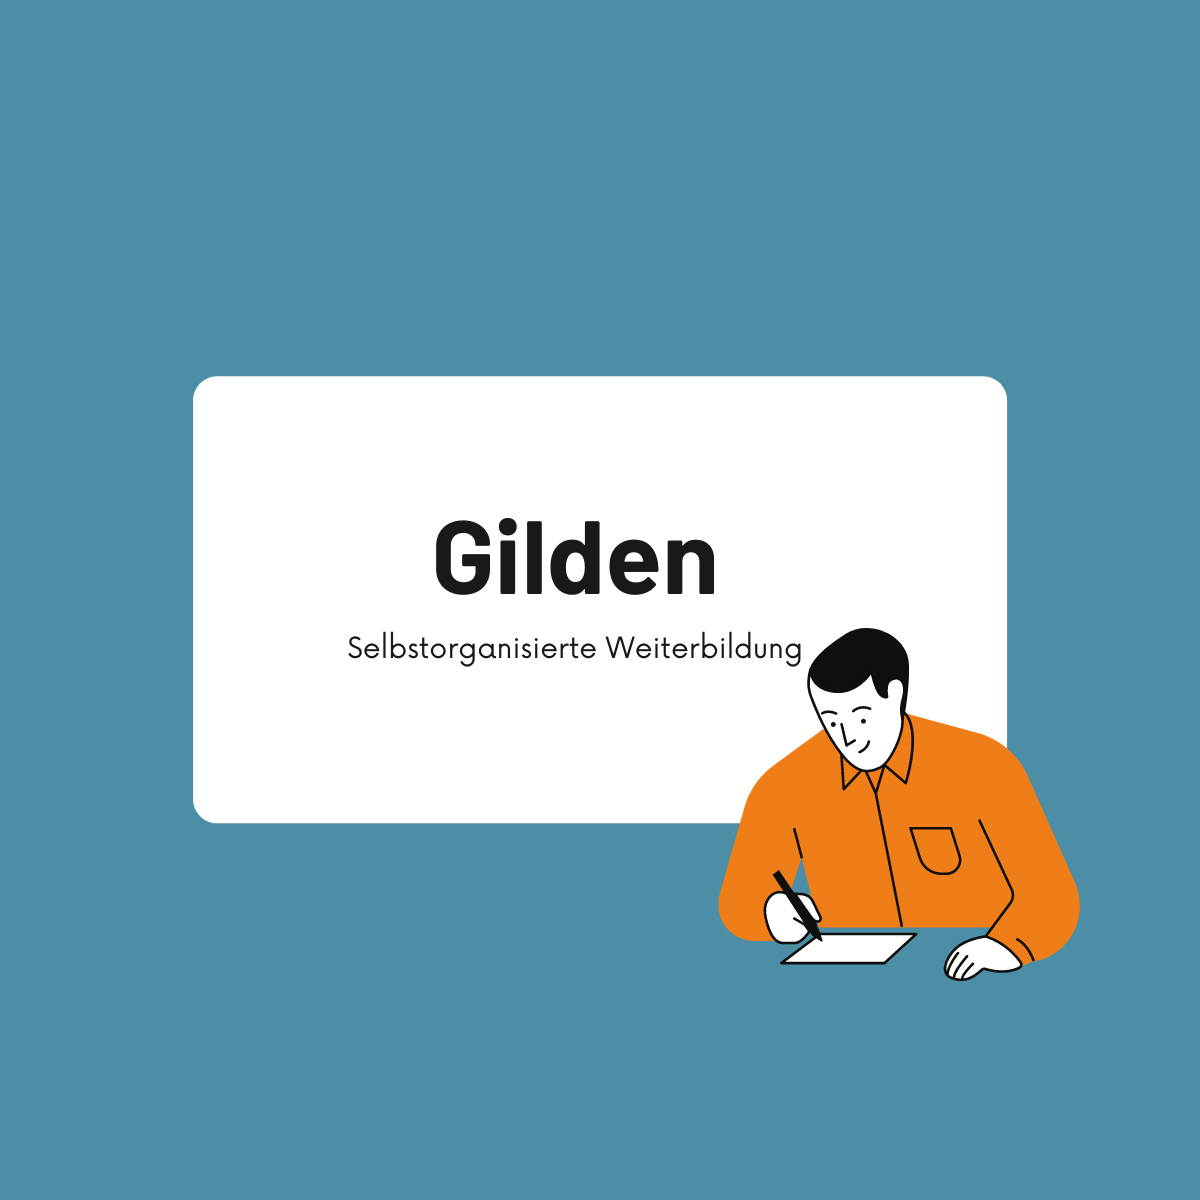 Gildensystem (2)